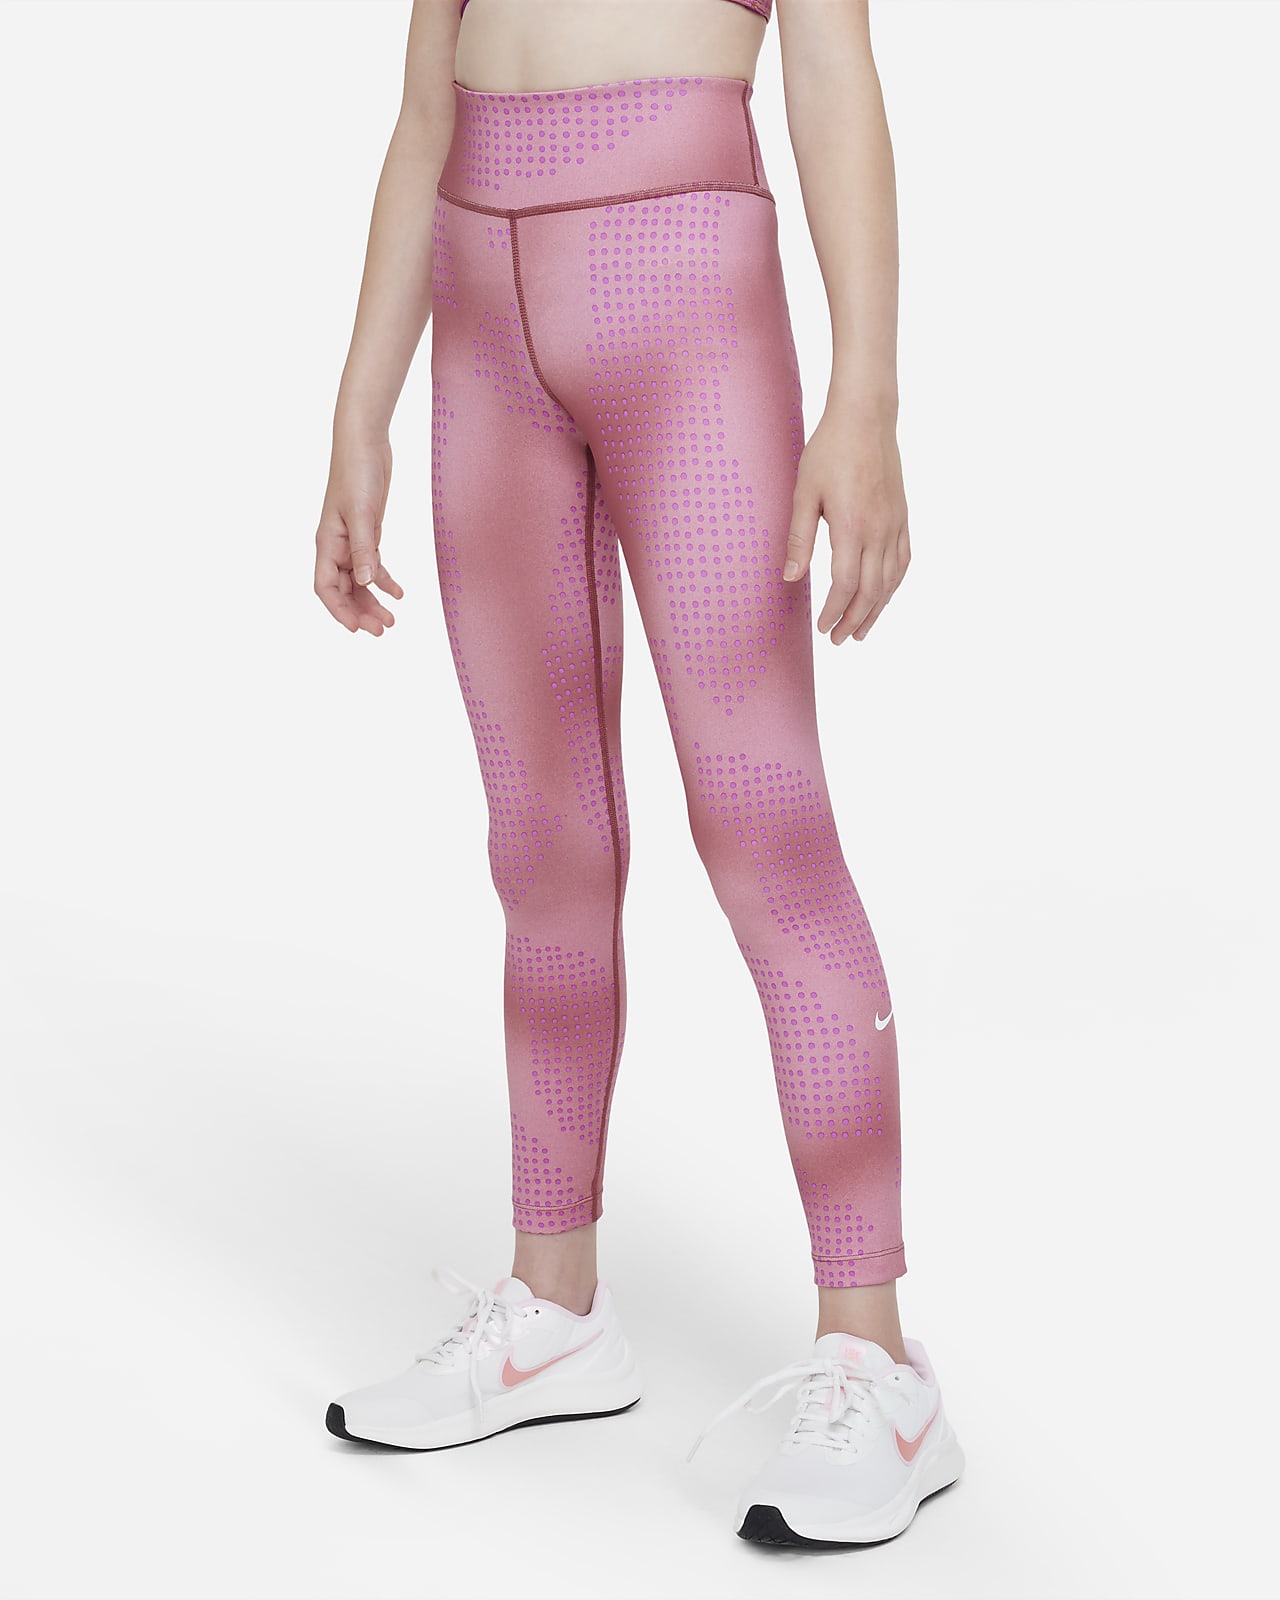 Nike Women's Pro 3” Shorts | DICK'S Sporting Goods